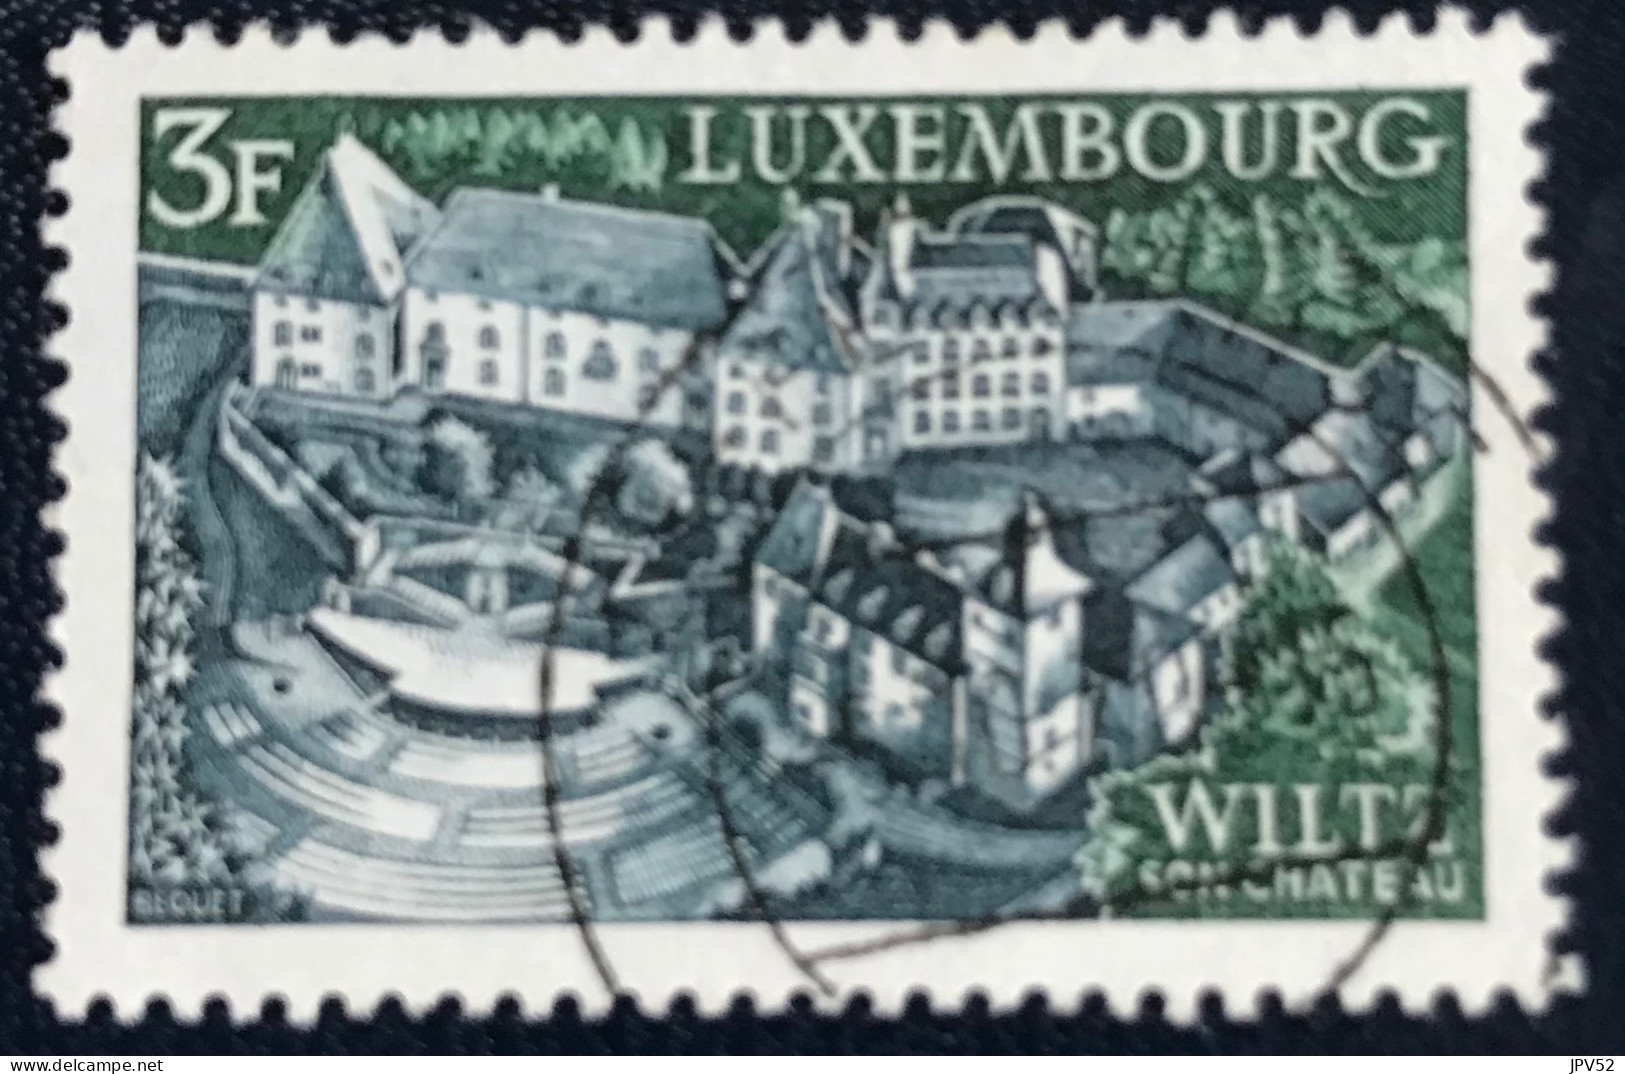 Luxembourg - Luxemburg - C18/33 - 1969 - (°)used - Michel 797 - Wiltz - Usati